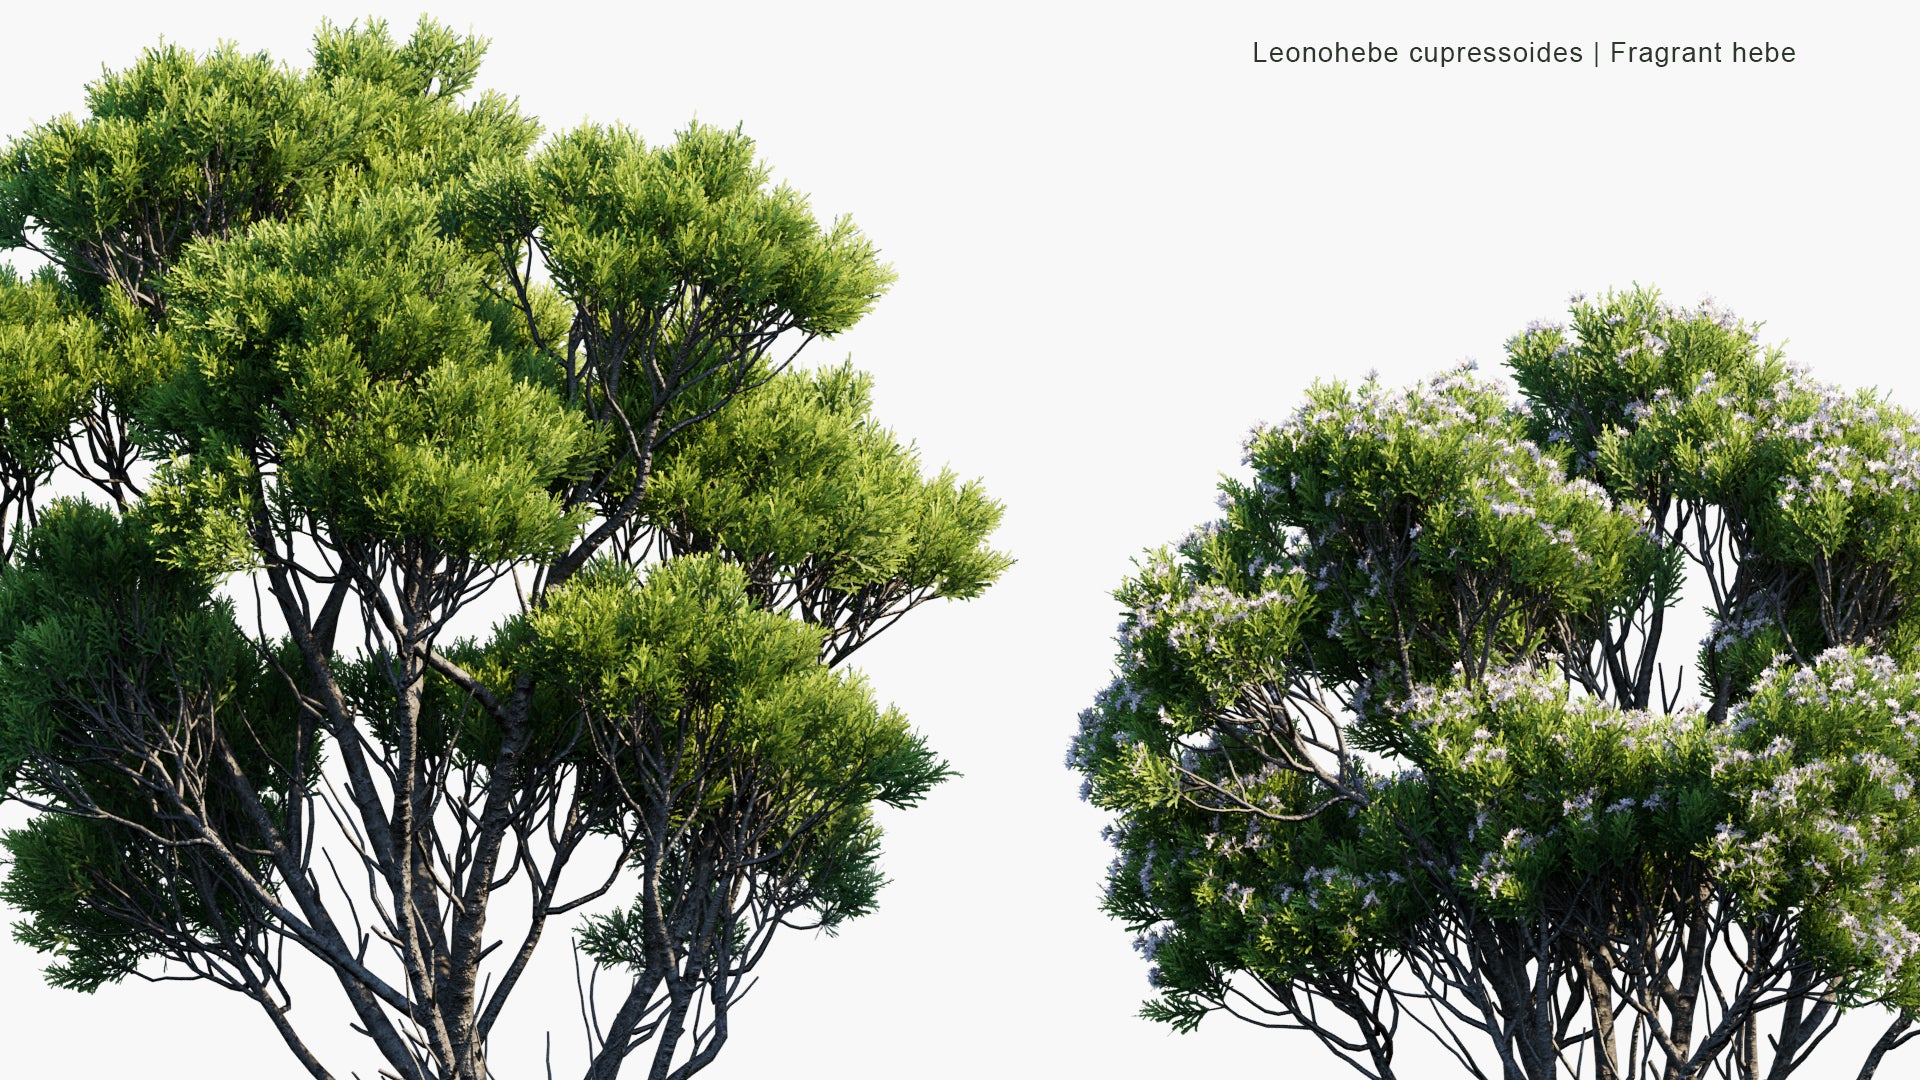 Leonohebe Cupressoides - Fragrant Hebe (3D Model)